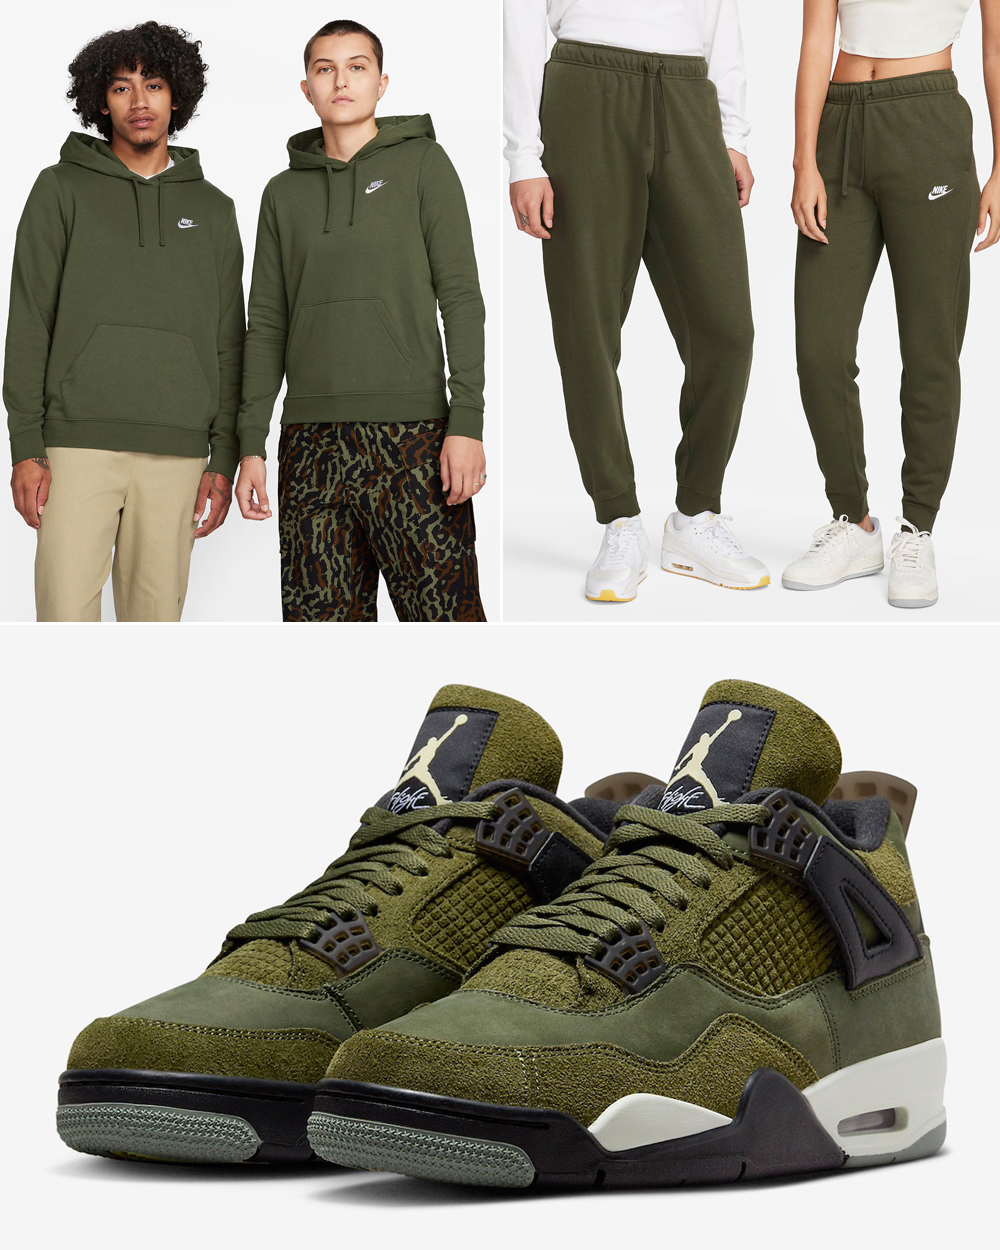 Air-Jordan-4-Craft-Olive-Nike-Fleece-Clothing